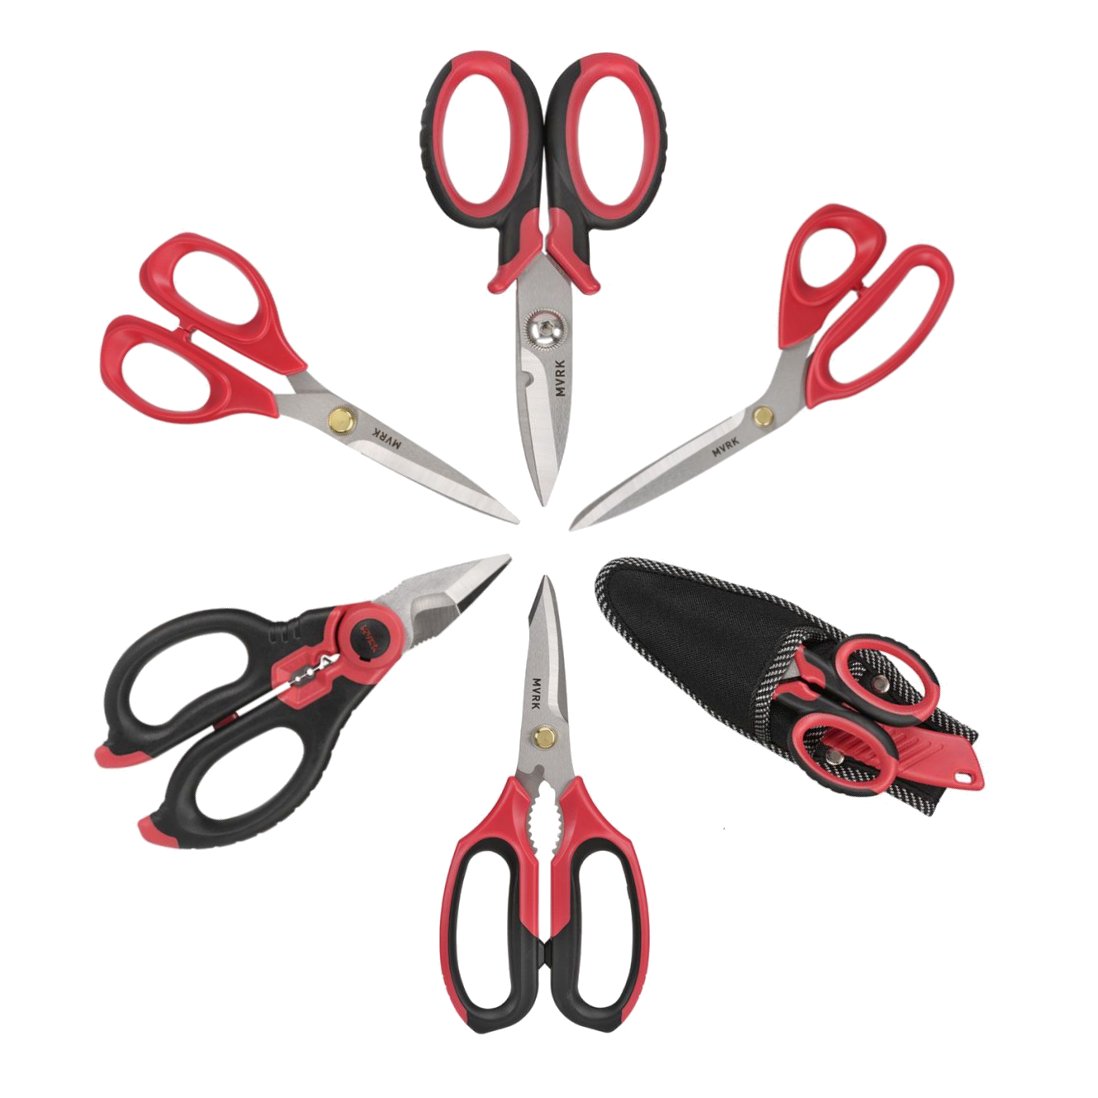 MVRK Scissors